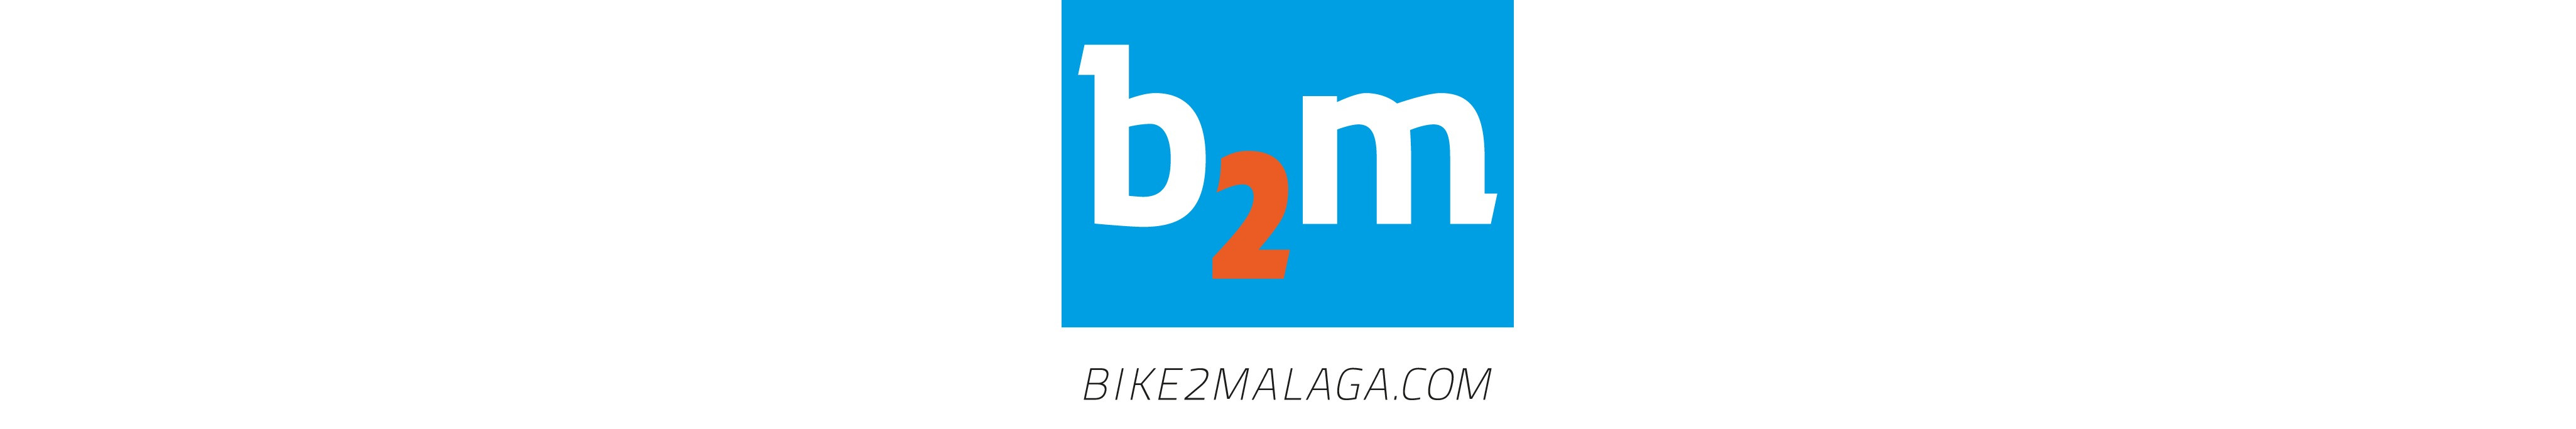 Bicycle rental service in Malaga, Nerja, Marbella